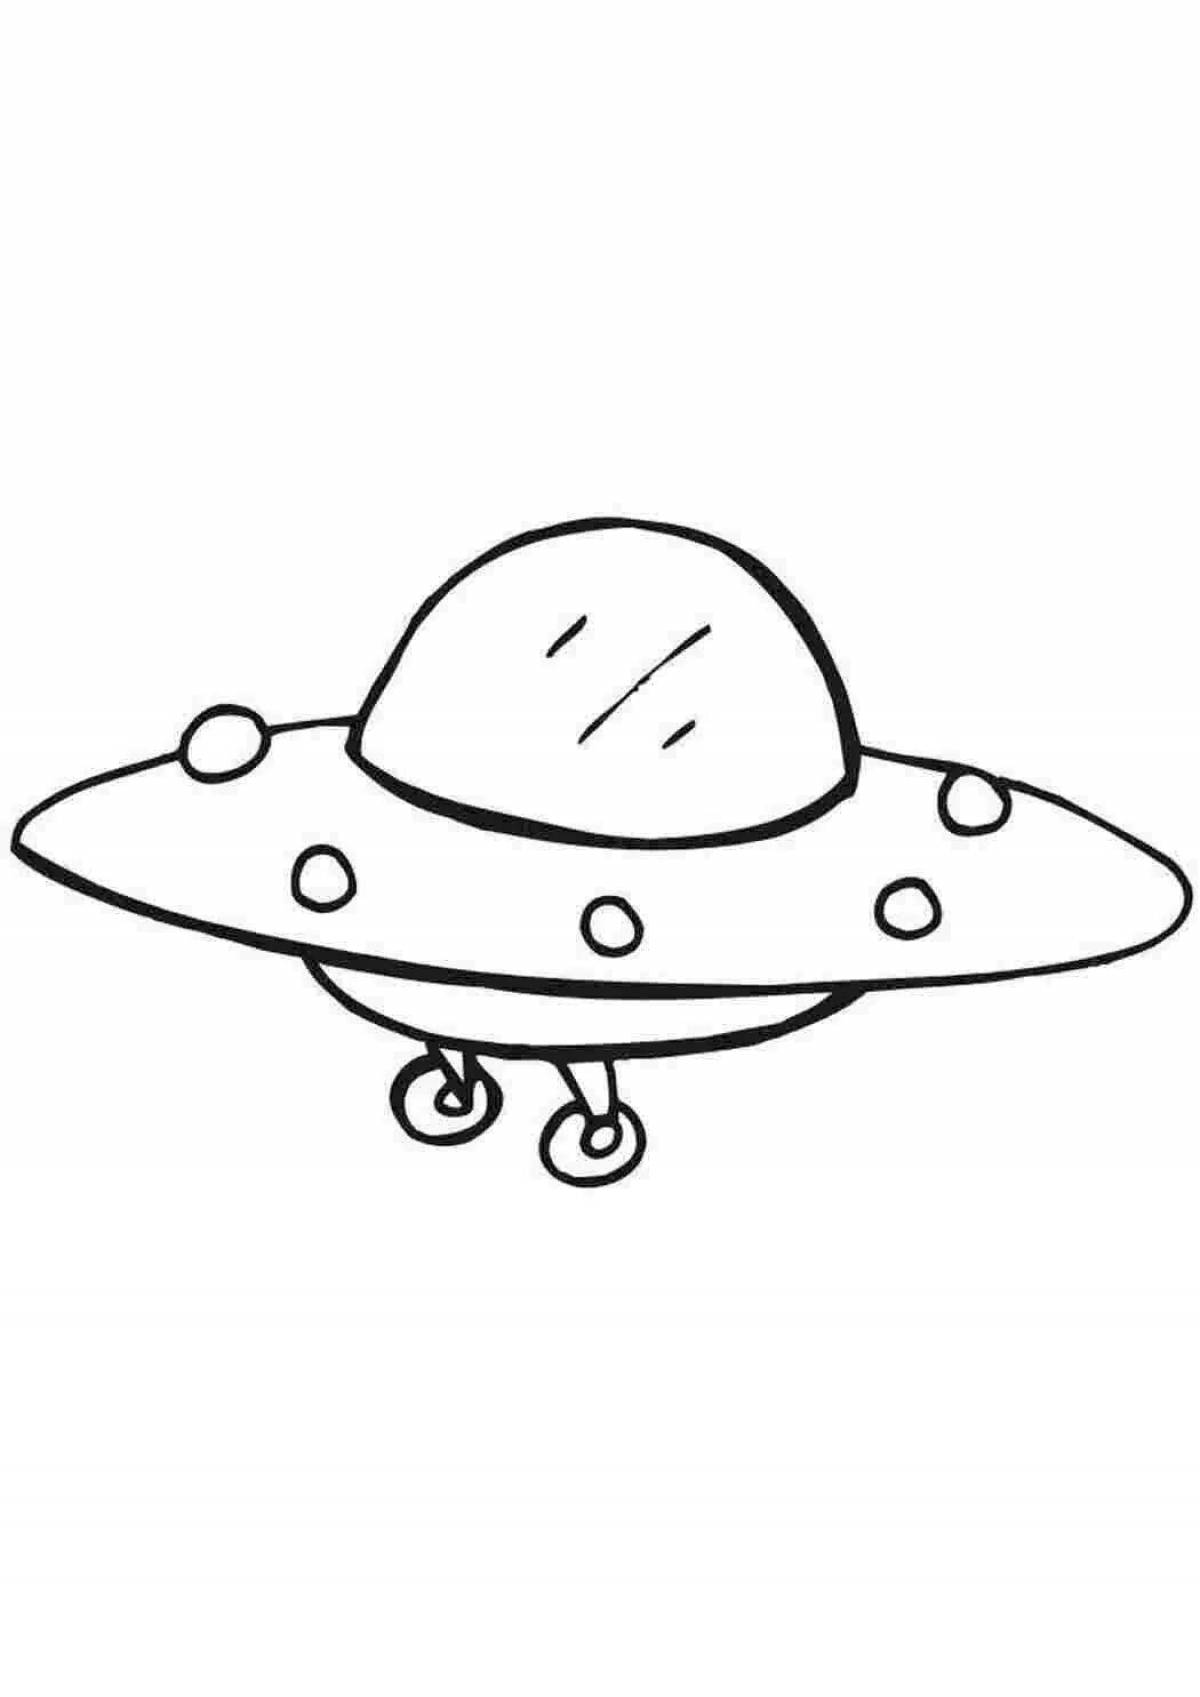 Flying saucer for kids #3